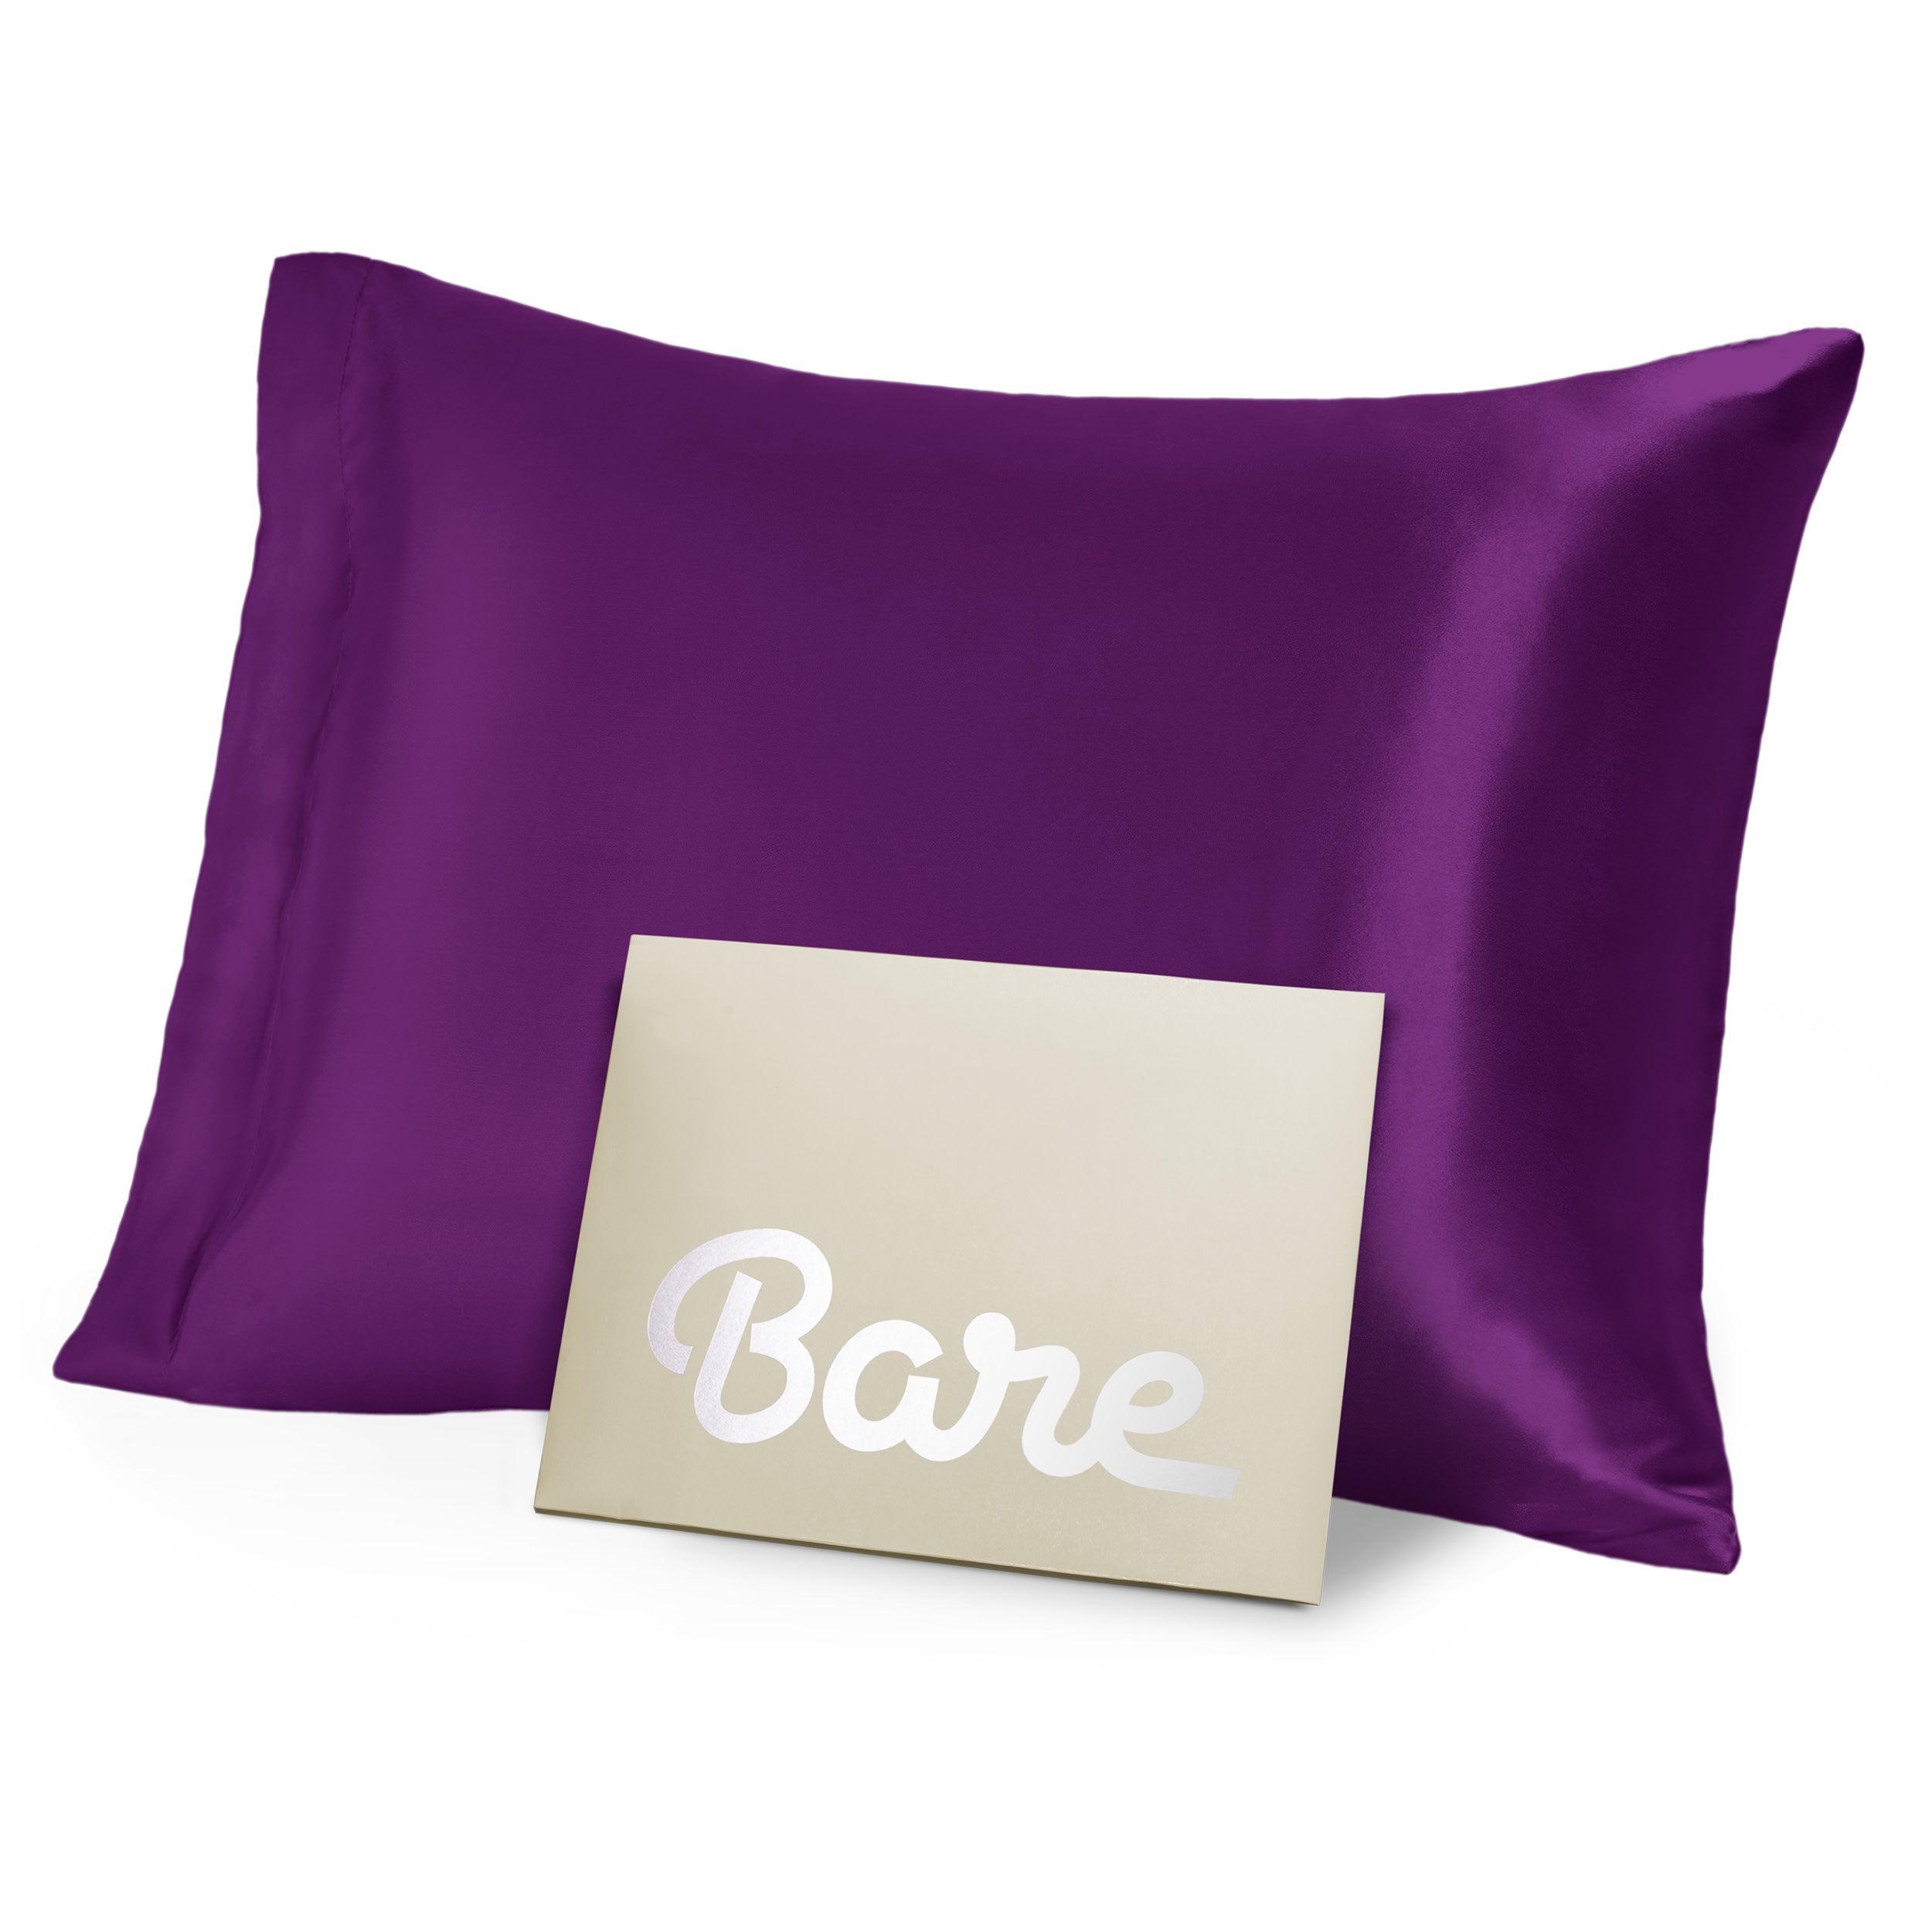 A purple mulberry silk pillowcase on a pillow